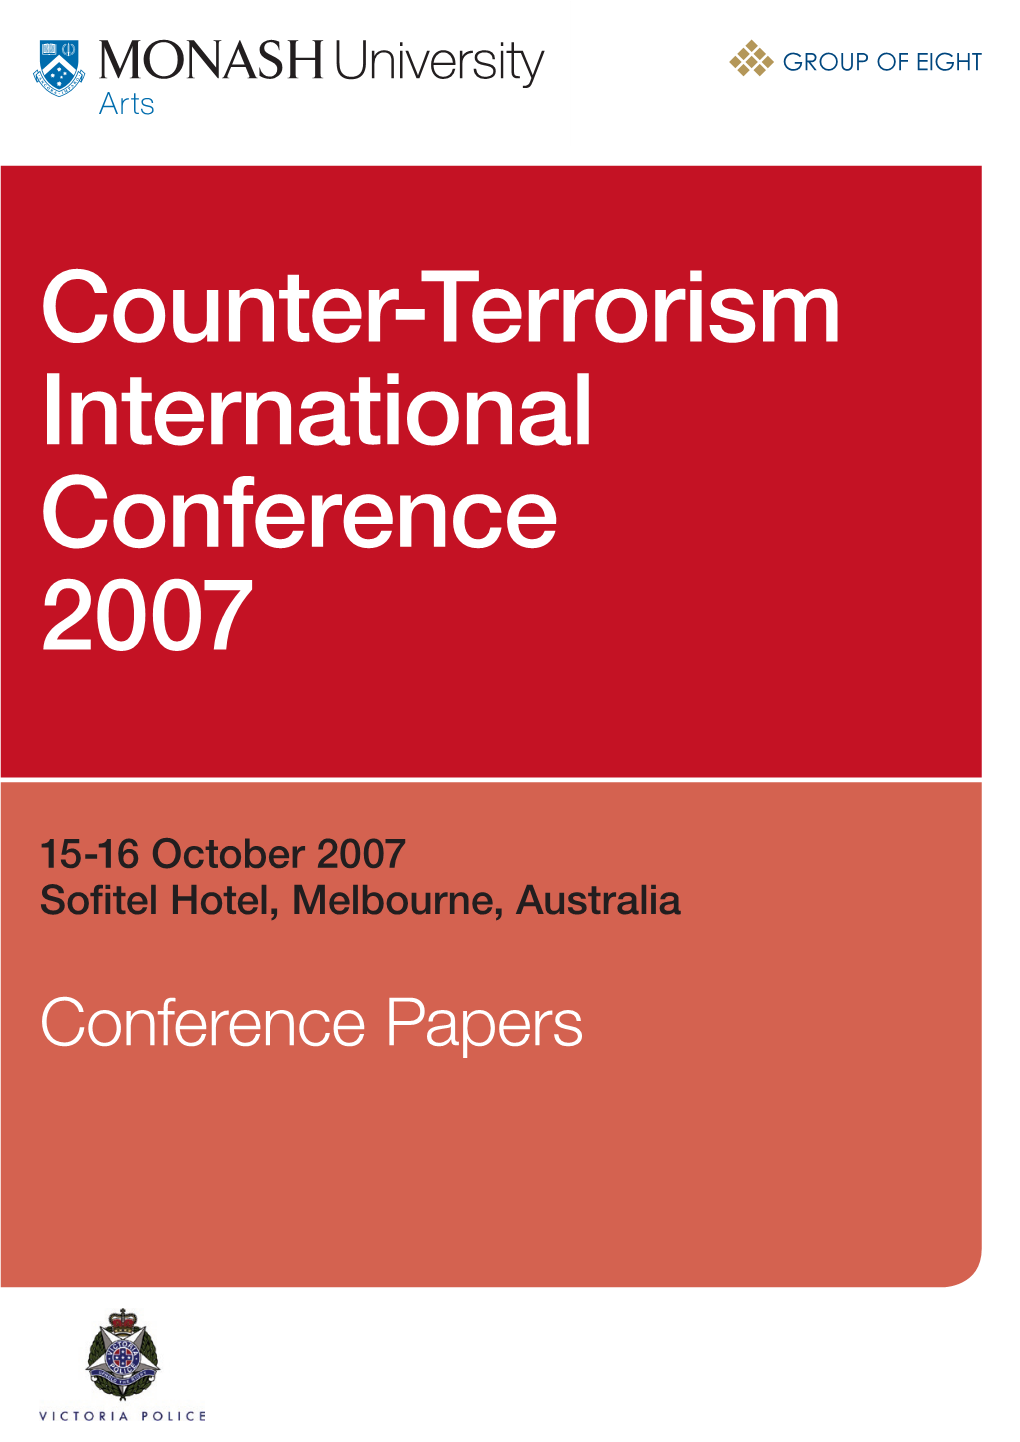 Counter-Terrorism International Conference 2007